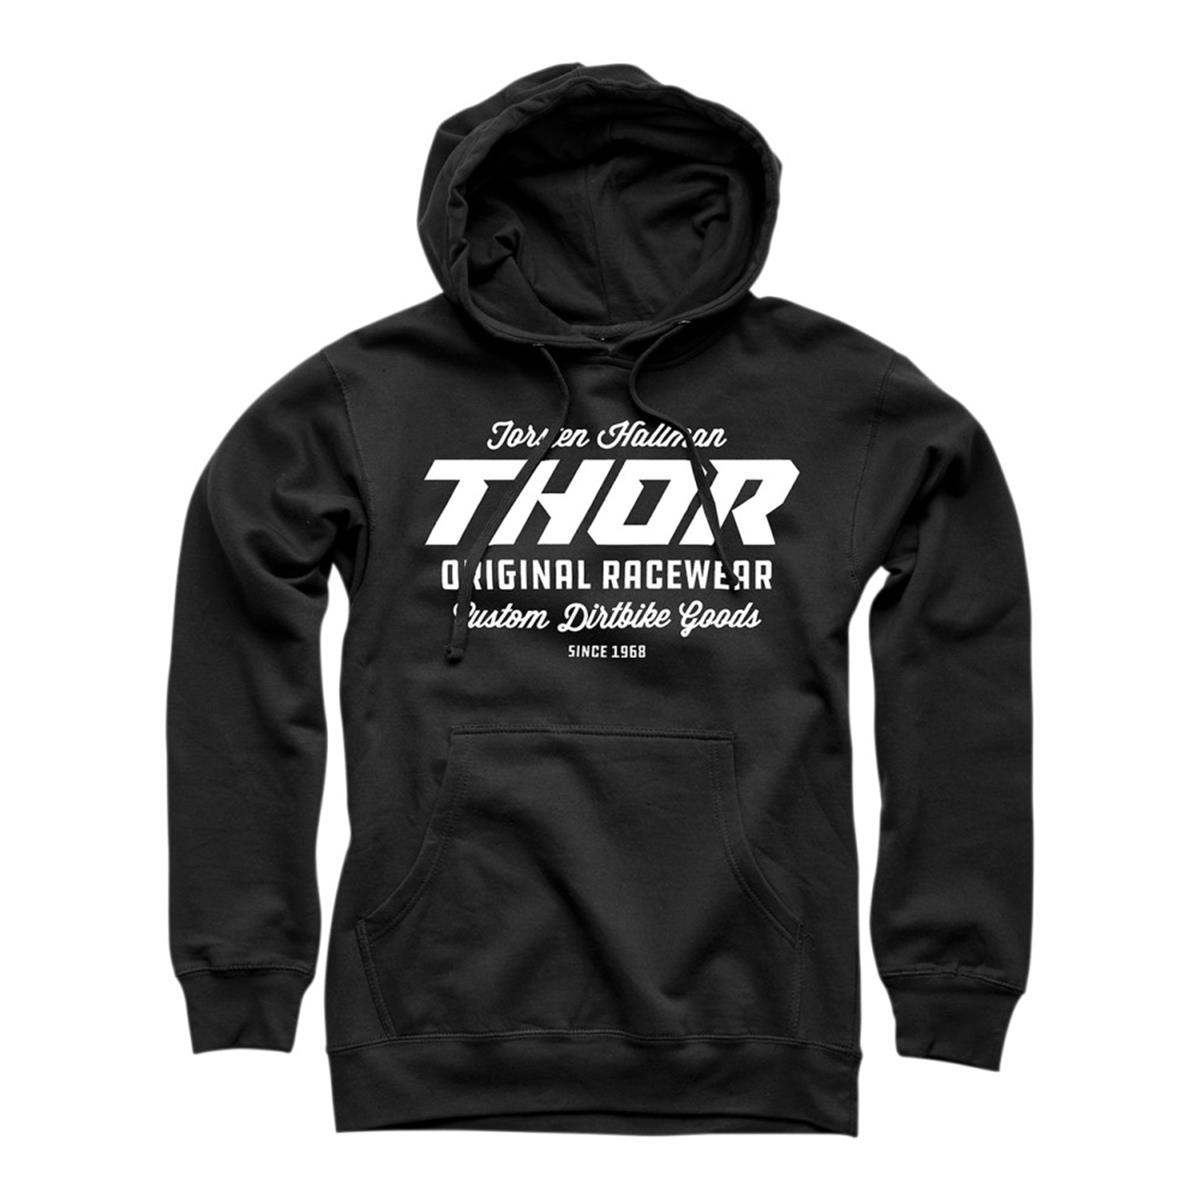 Thor Hoody The Goods Schwarz